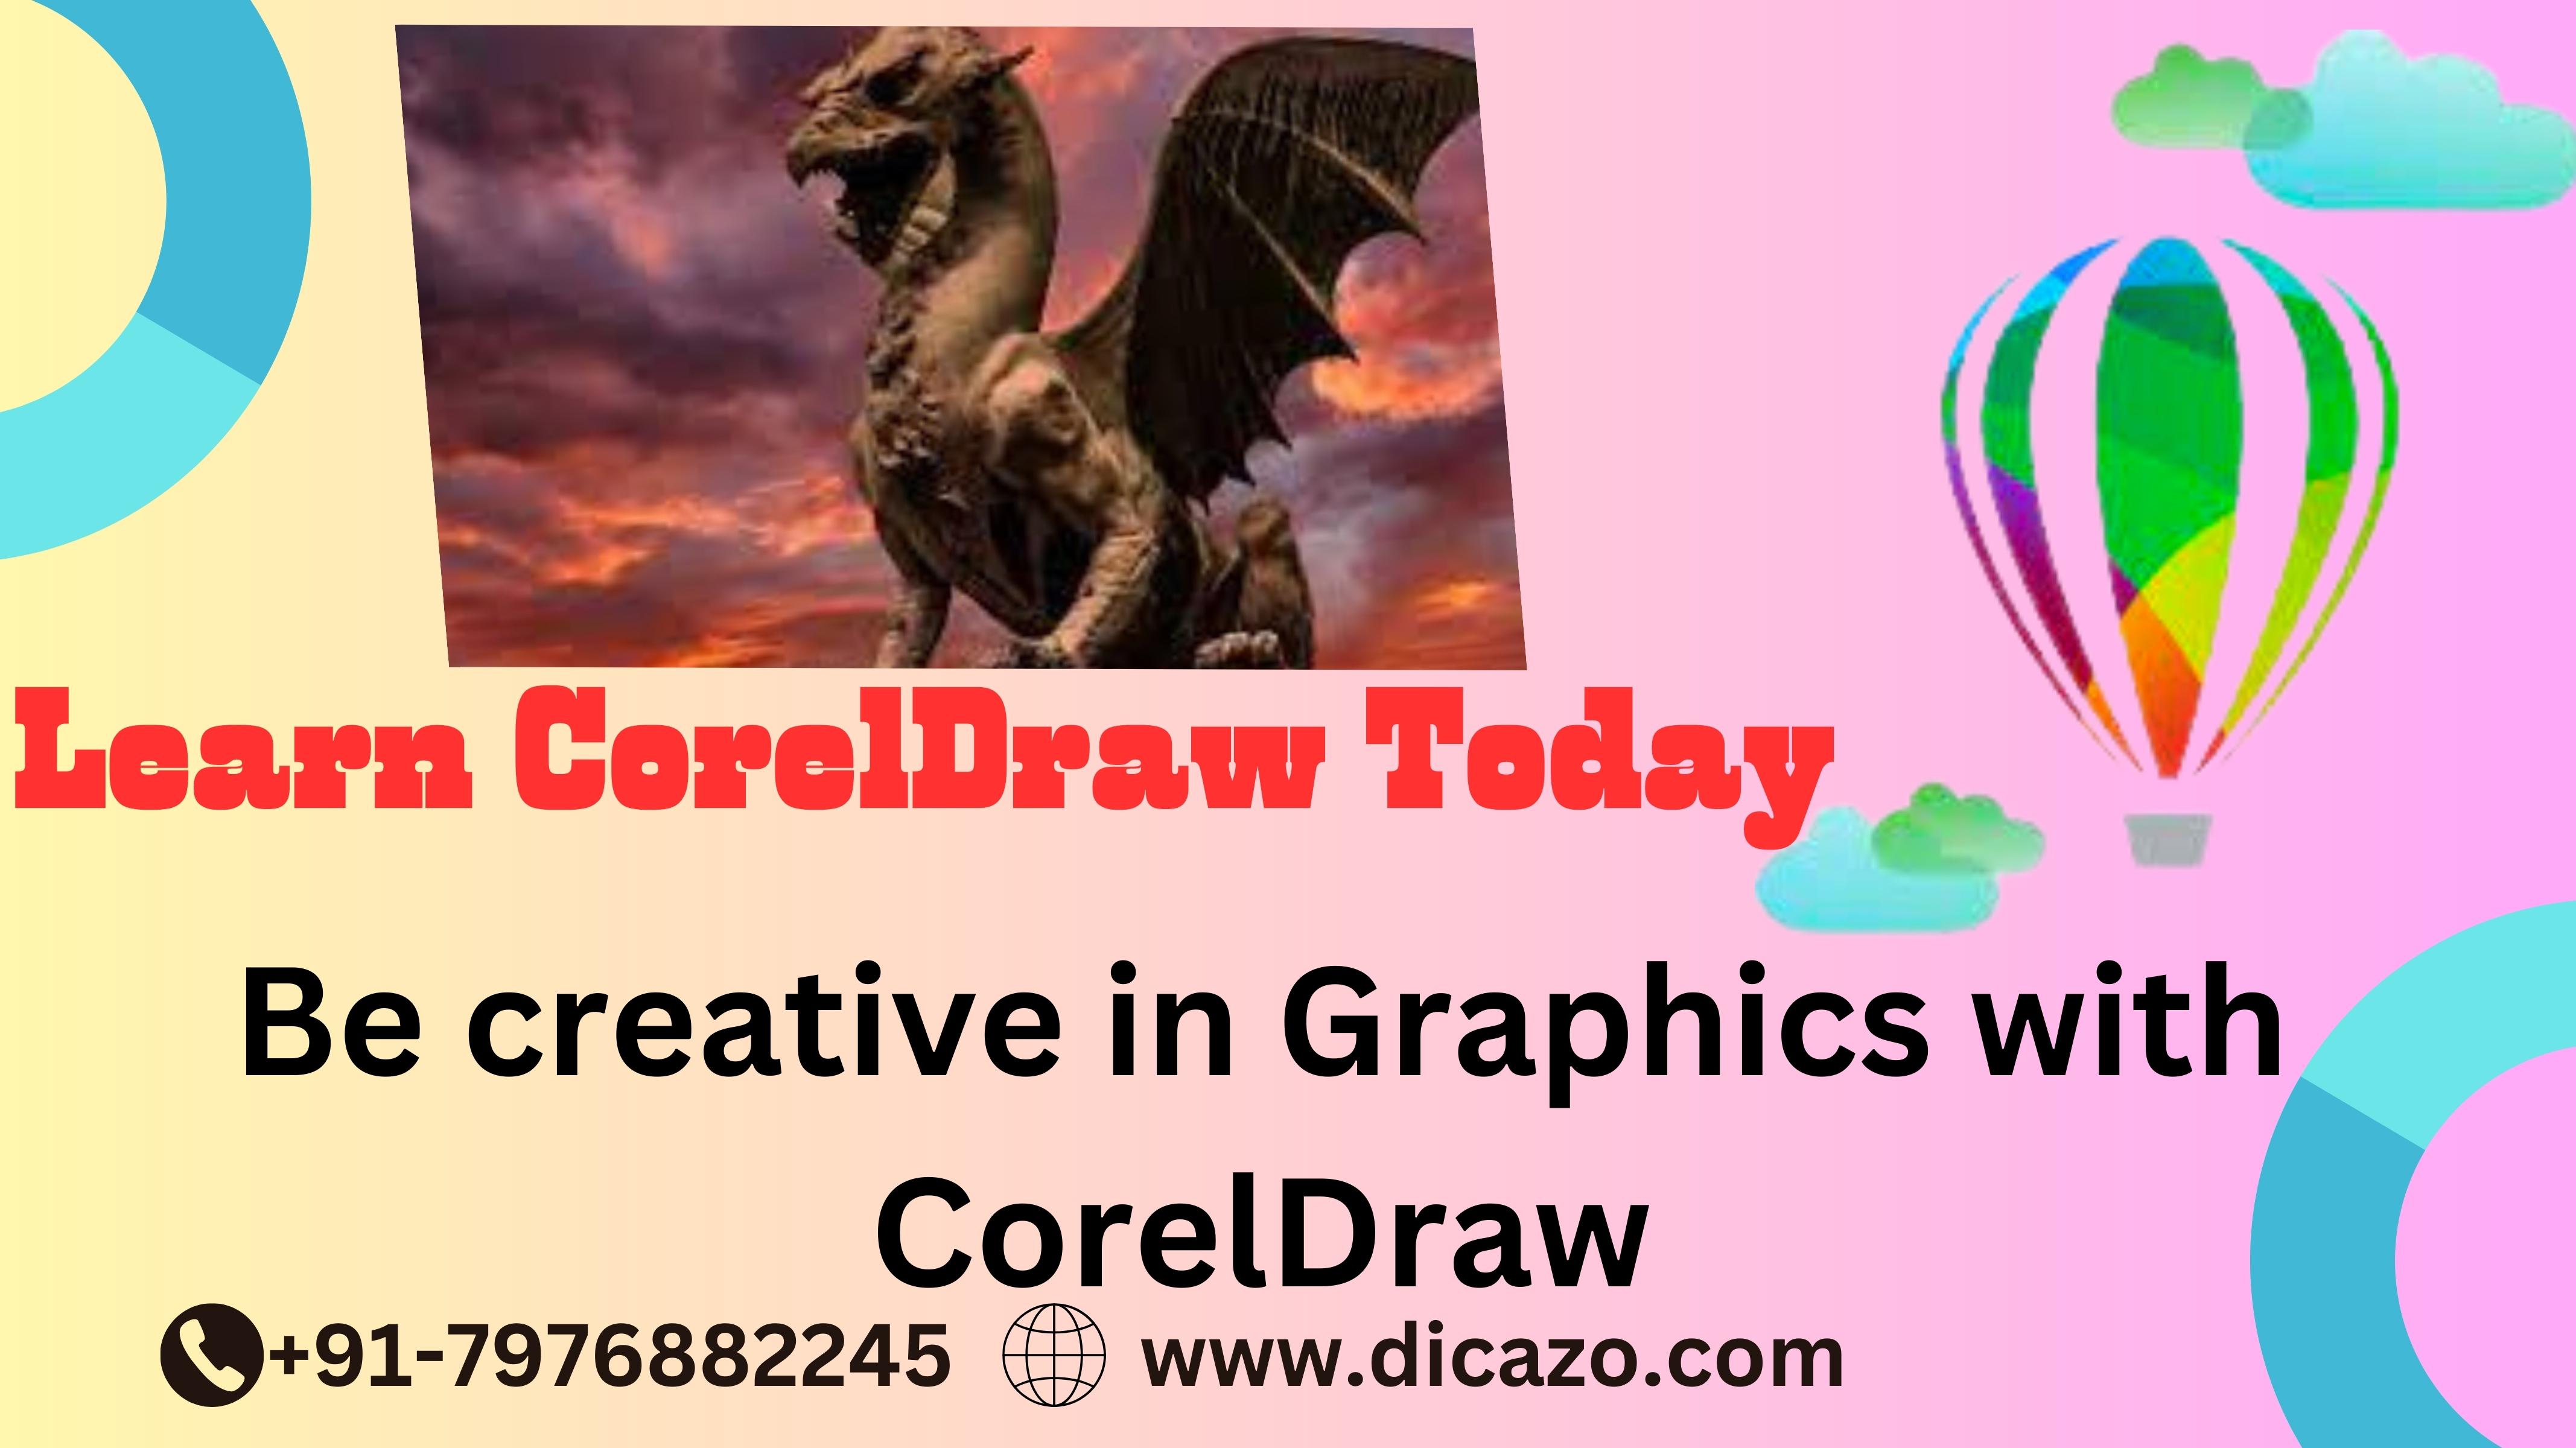 Corel Draw & Photoshop Online Training